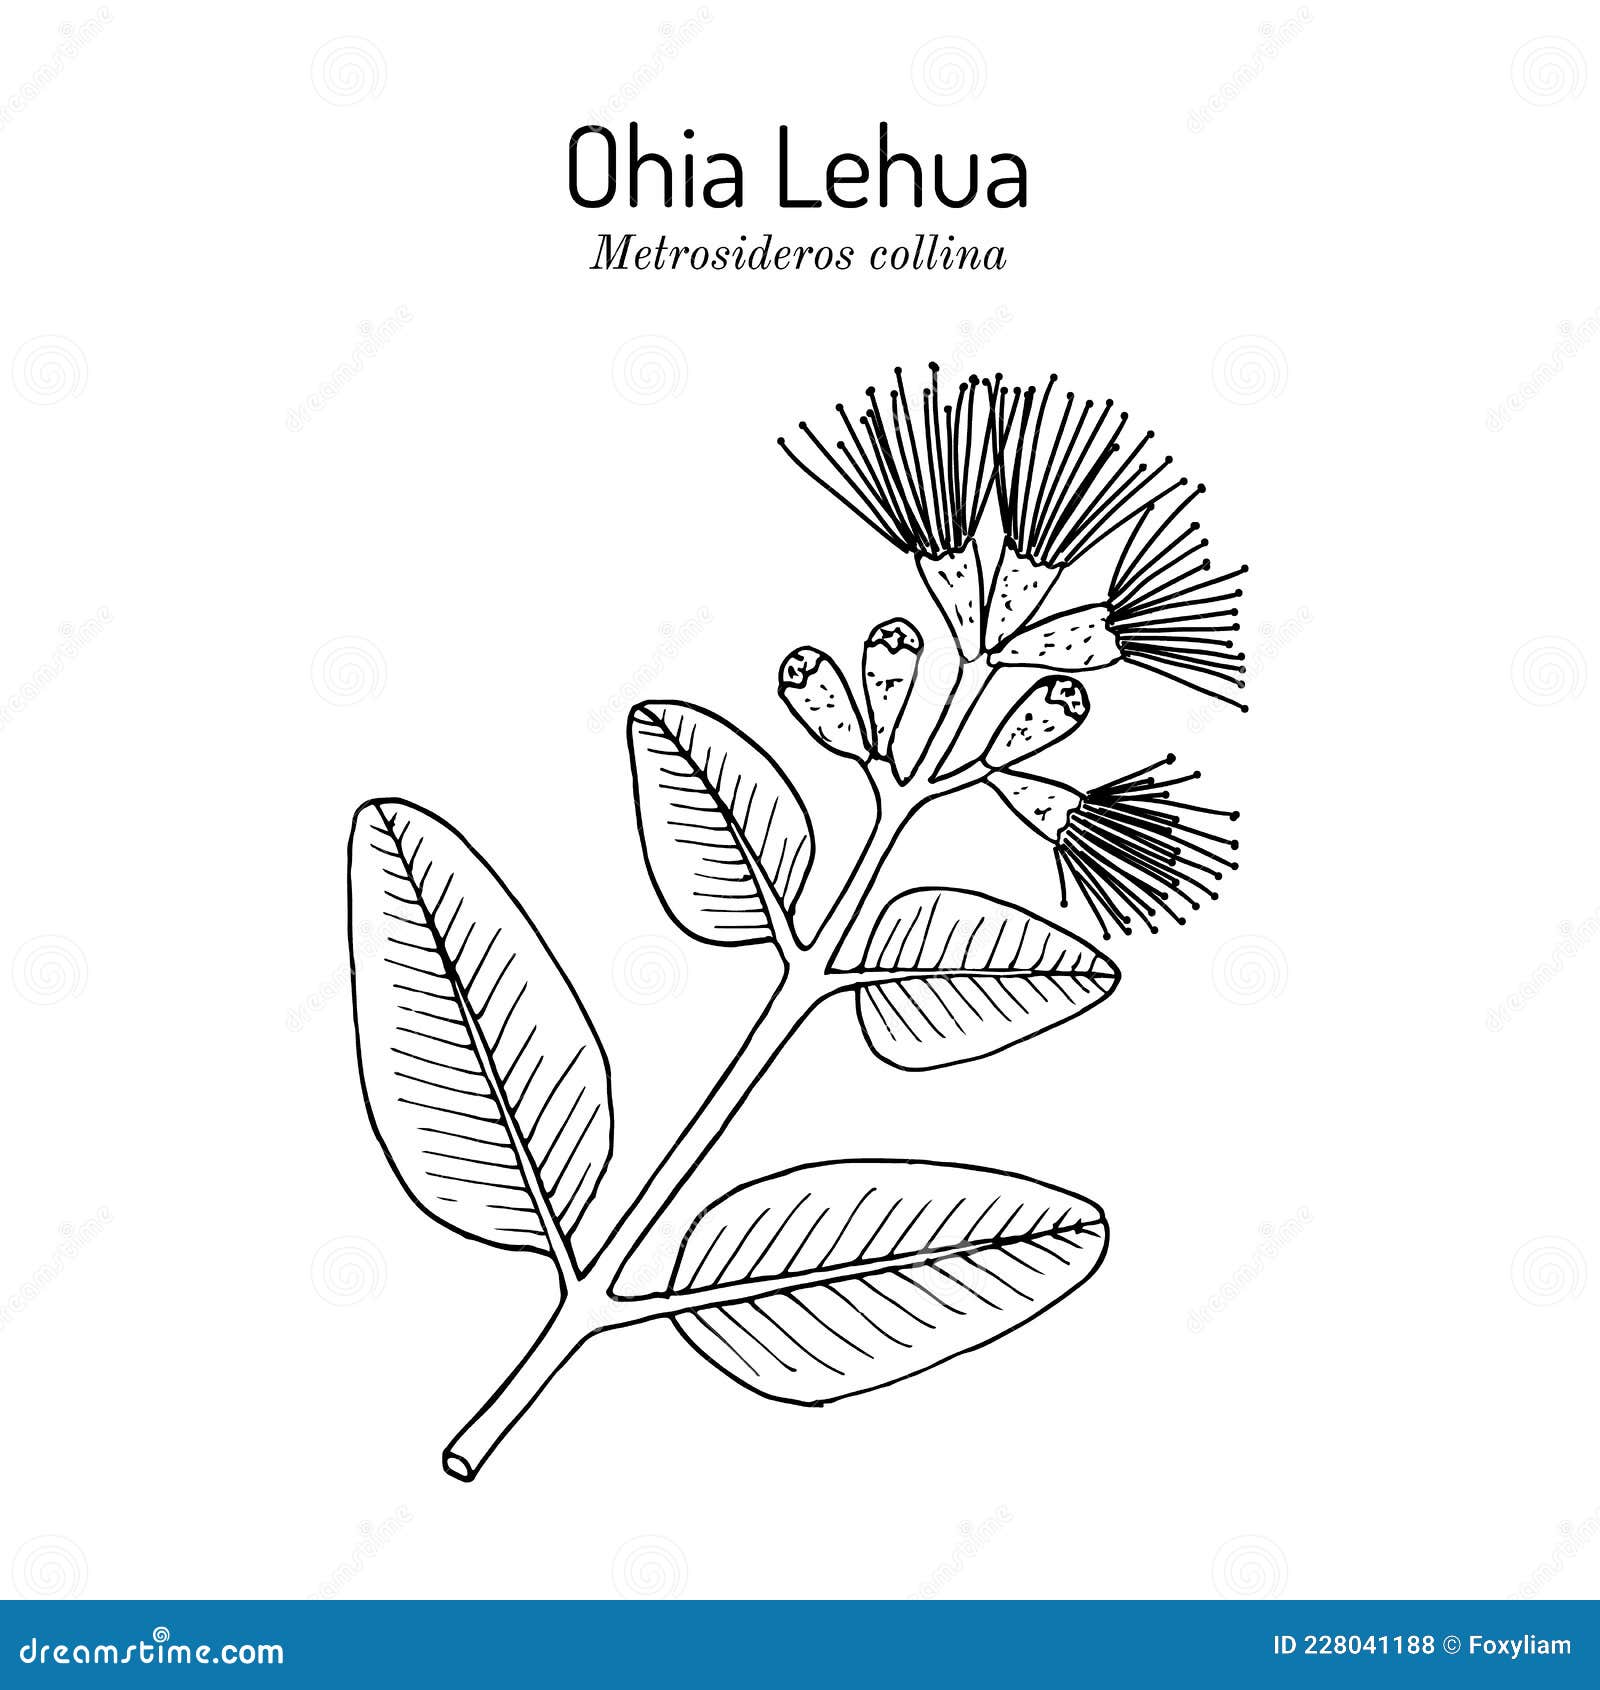 ohia lehua metrosideros macropus m. collina , state flower of hawaii